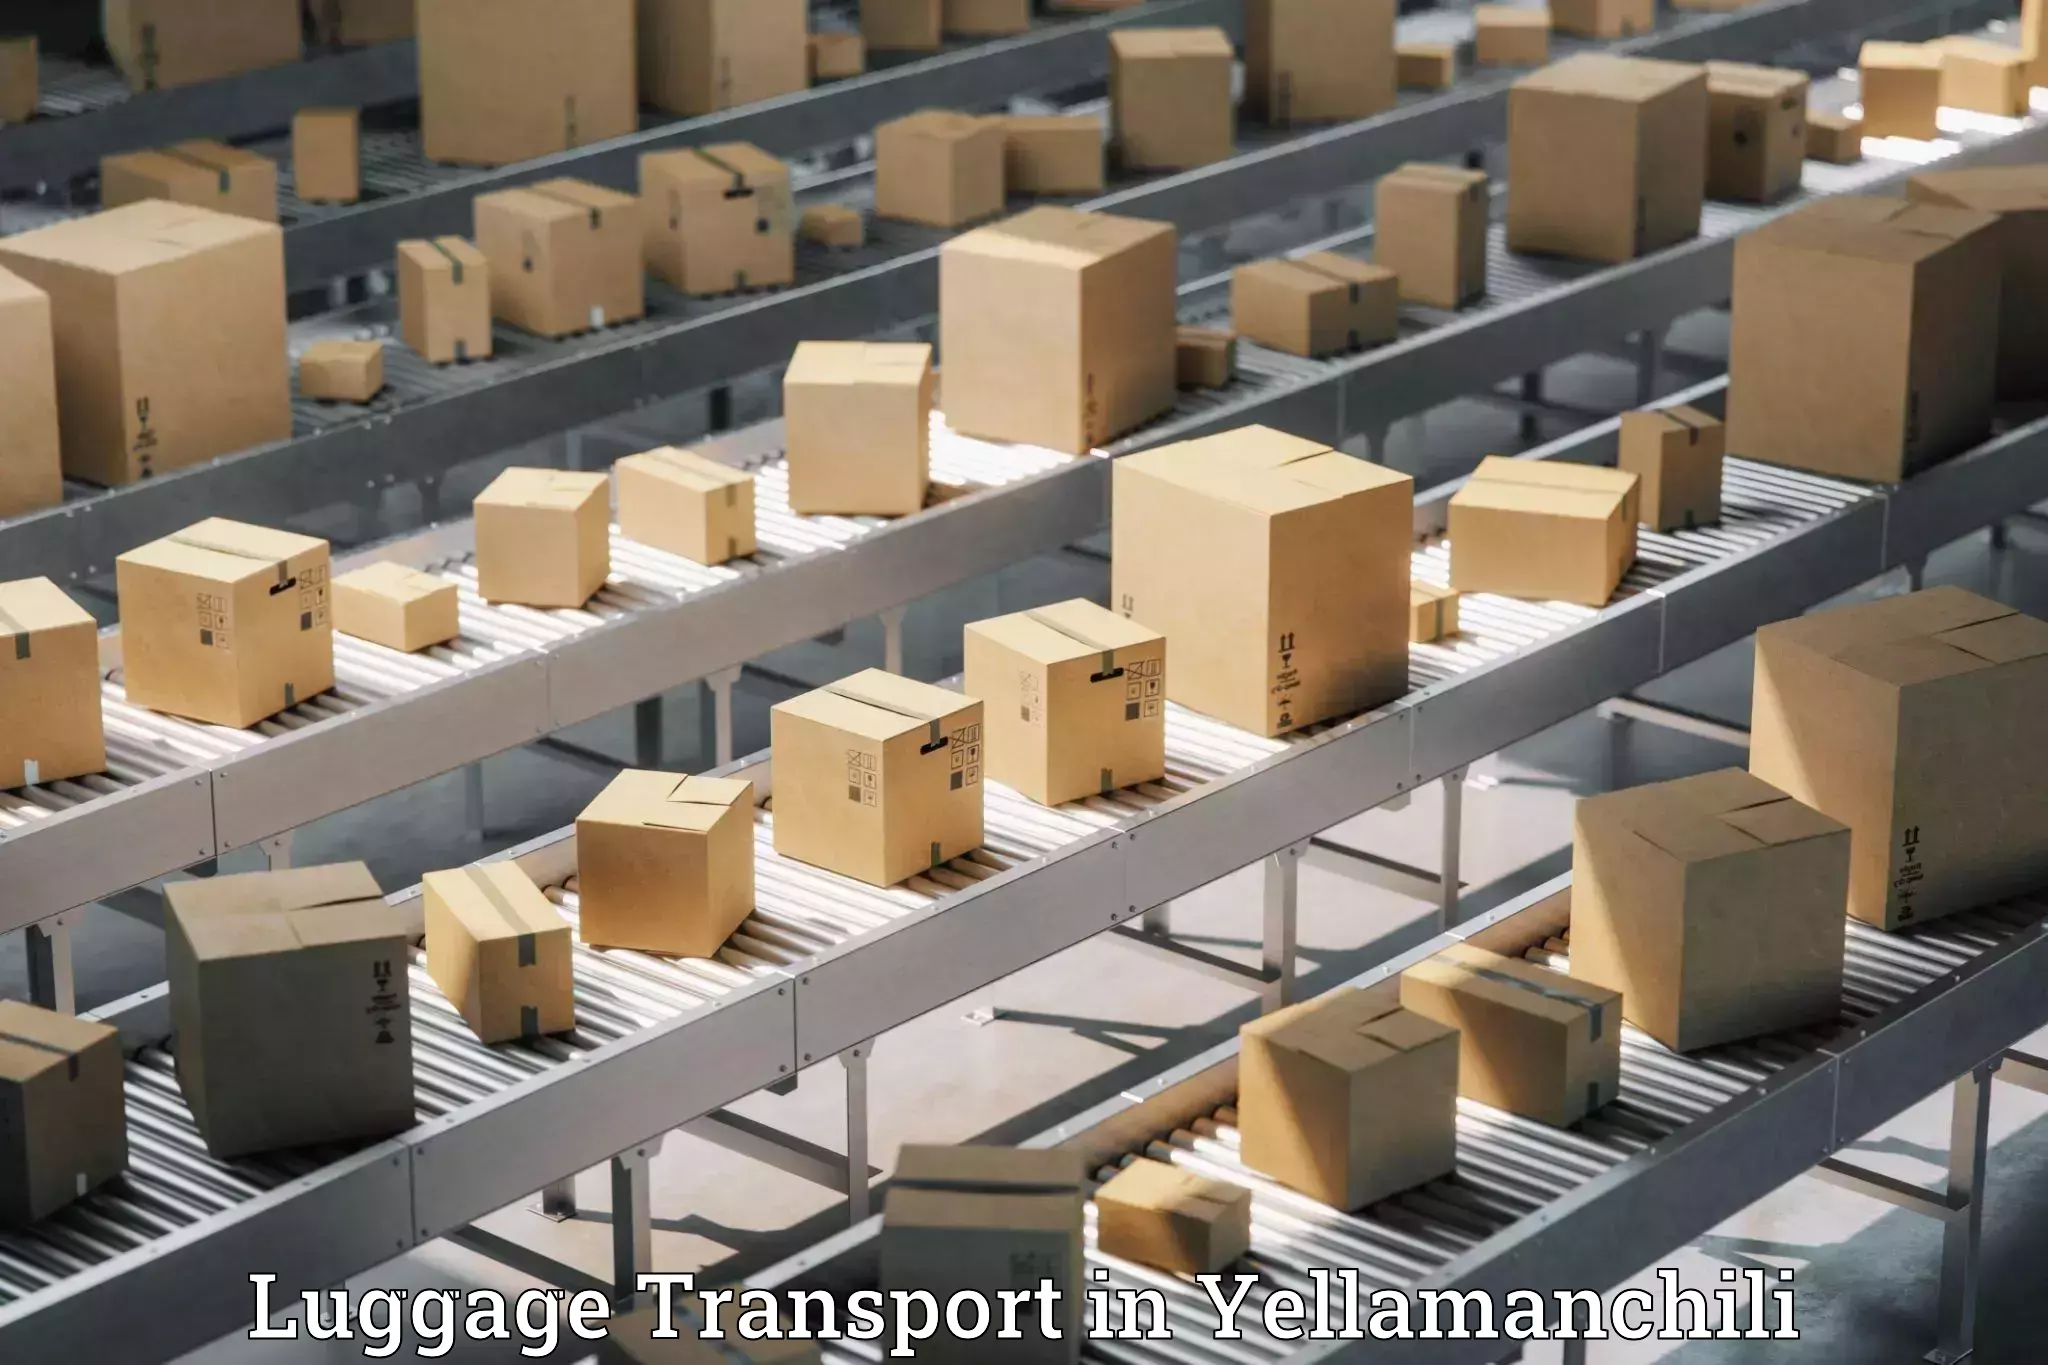 Corporate baggage transport in Yellamanchili